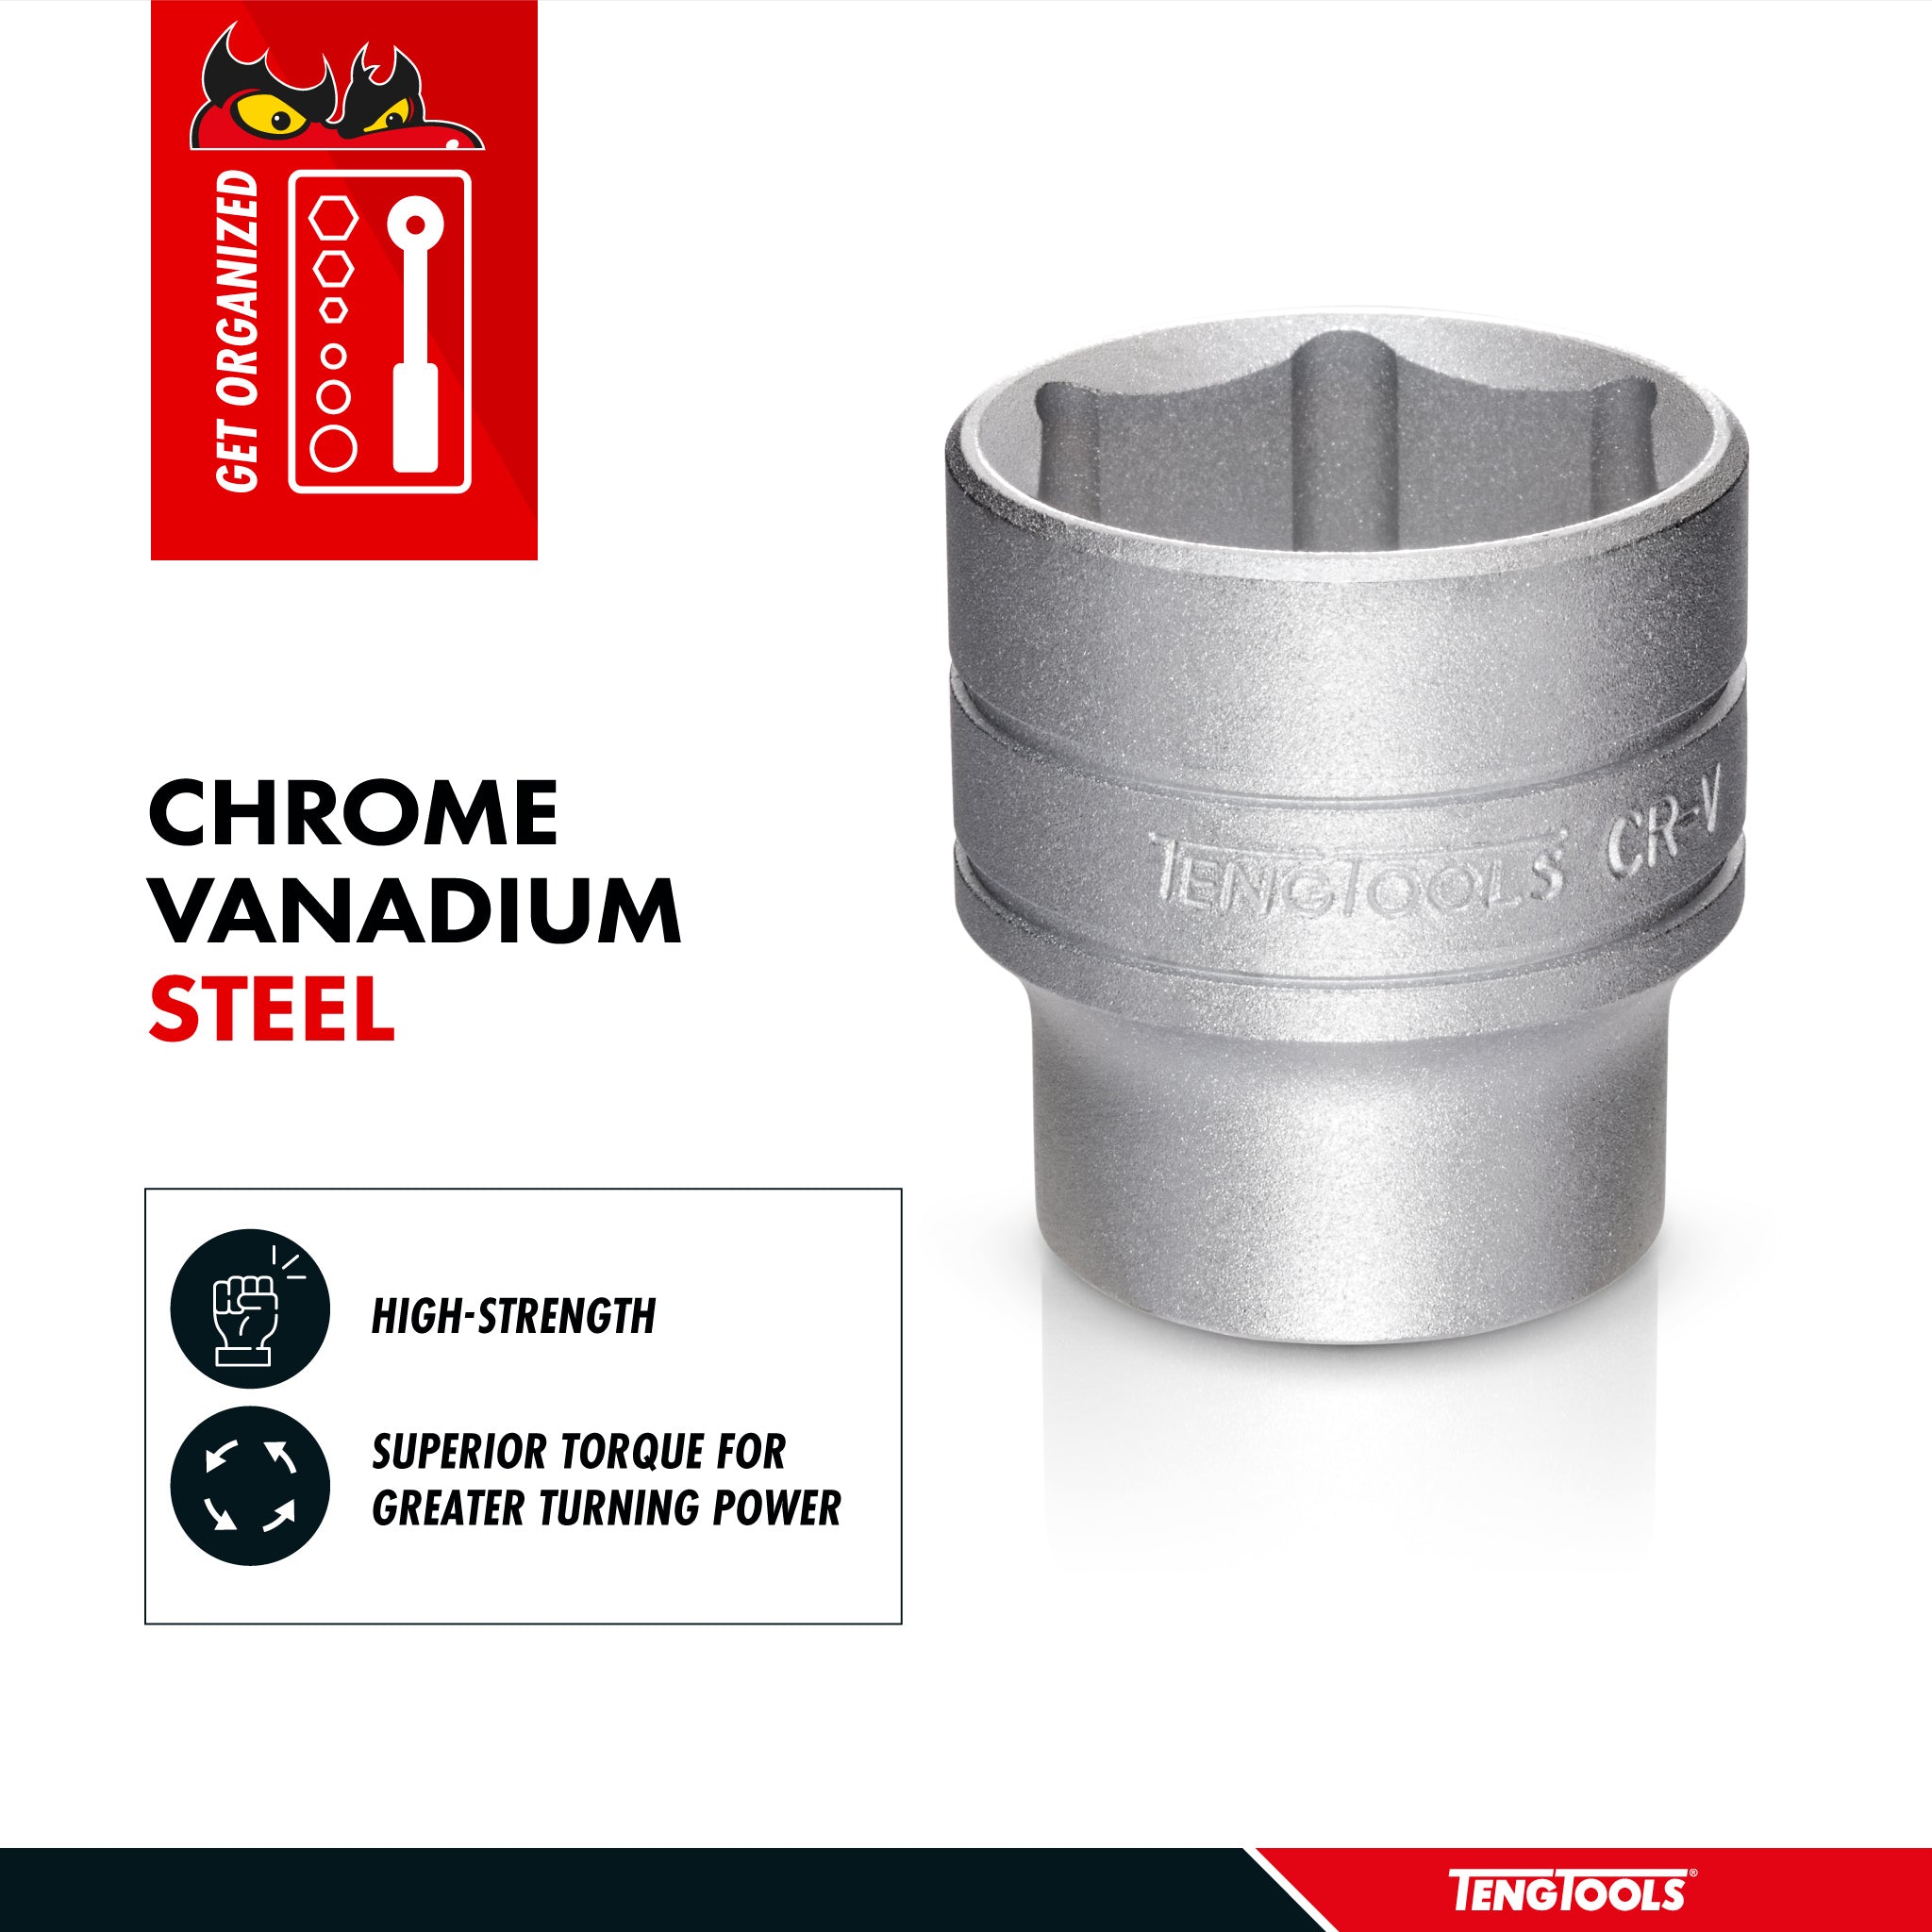 Teng Tools 6 Point SAE Shallow 3/8 Inch Drive Chrome Vanadium Sockets - 9/16